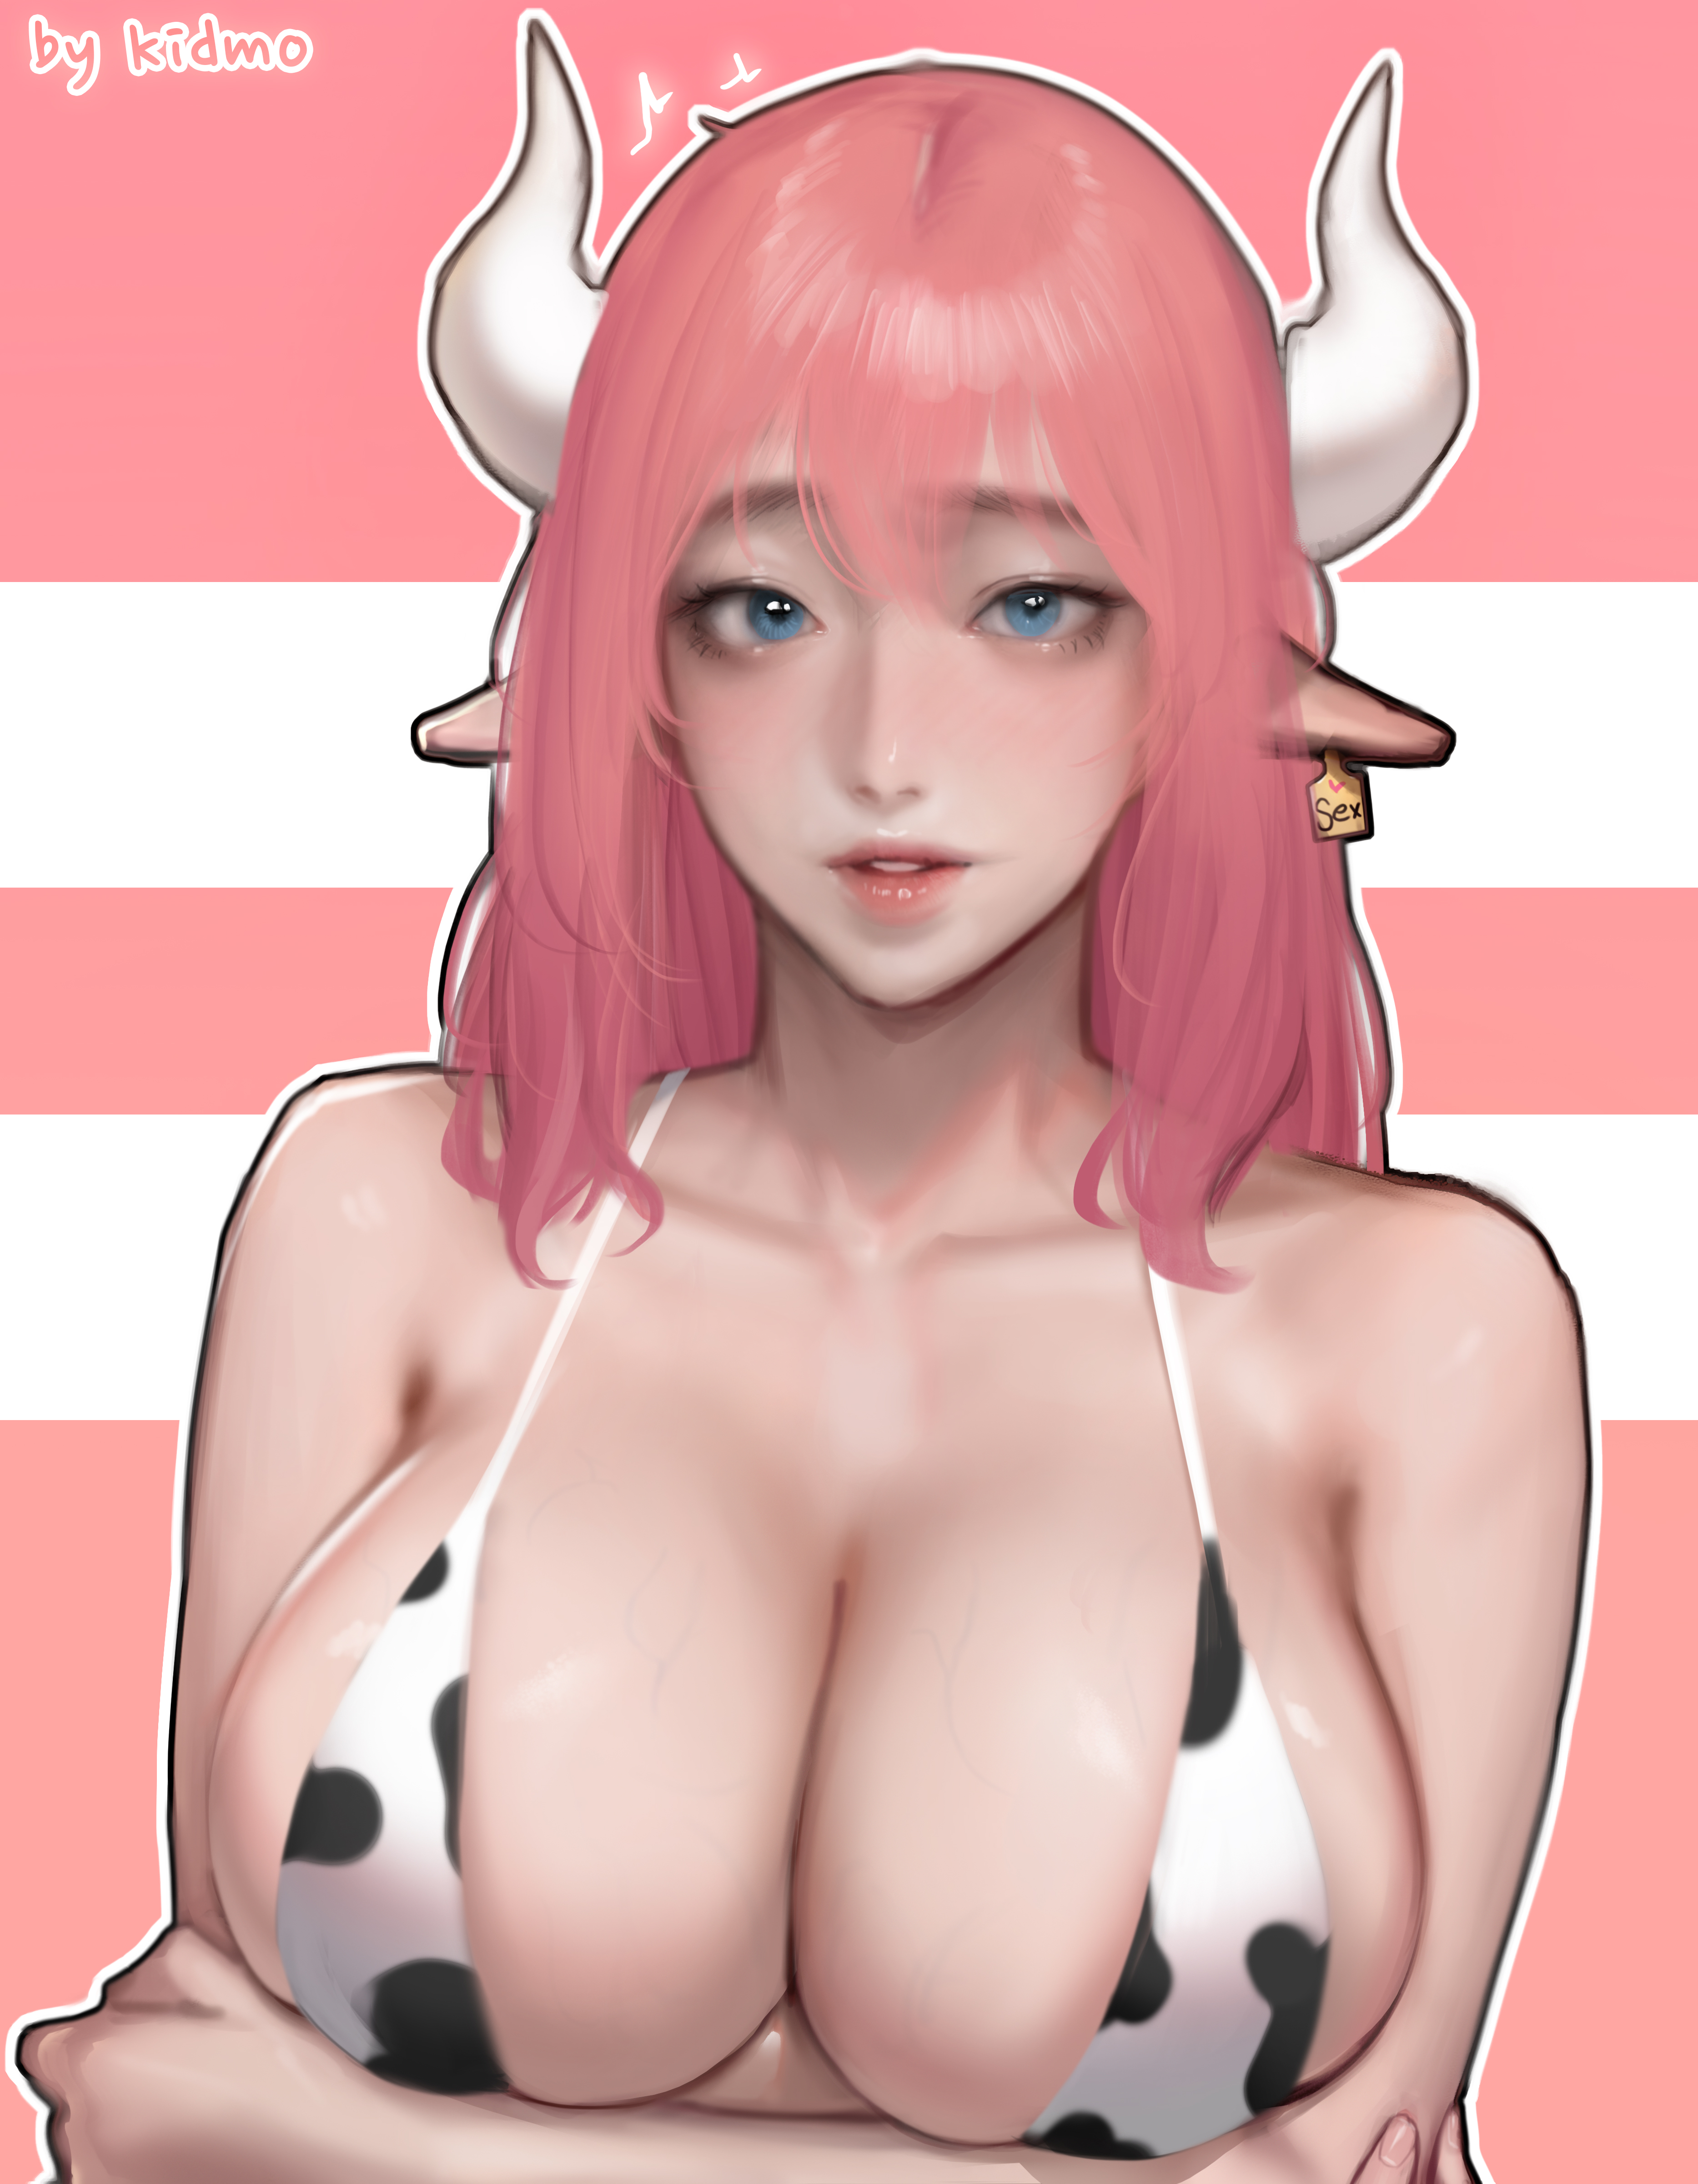 General 3734x4803 boobs women Kidmo cow girl pink hair horns big boobs cowkinis blushing pointy ears